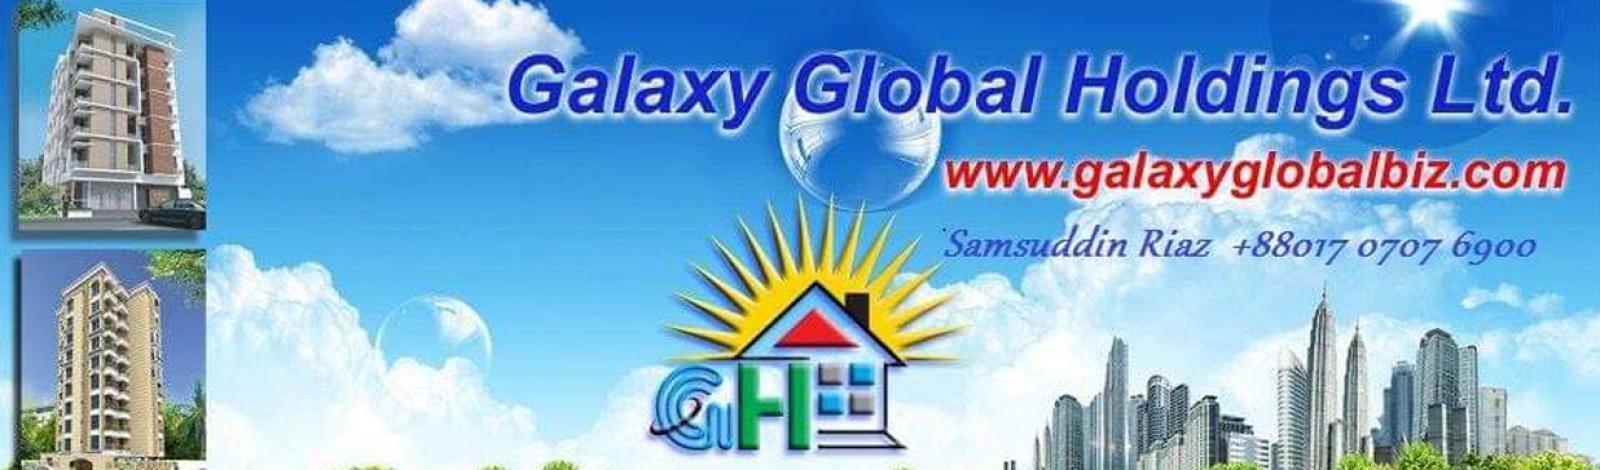 Galaxy Global Holdings Ltd. banner